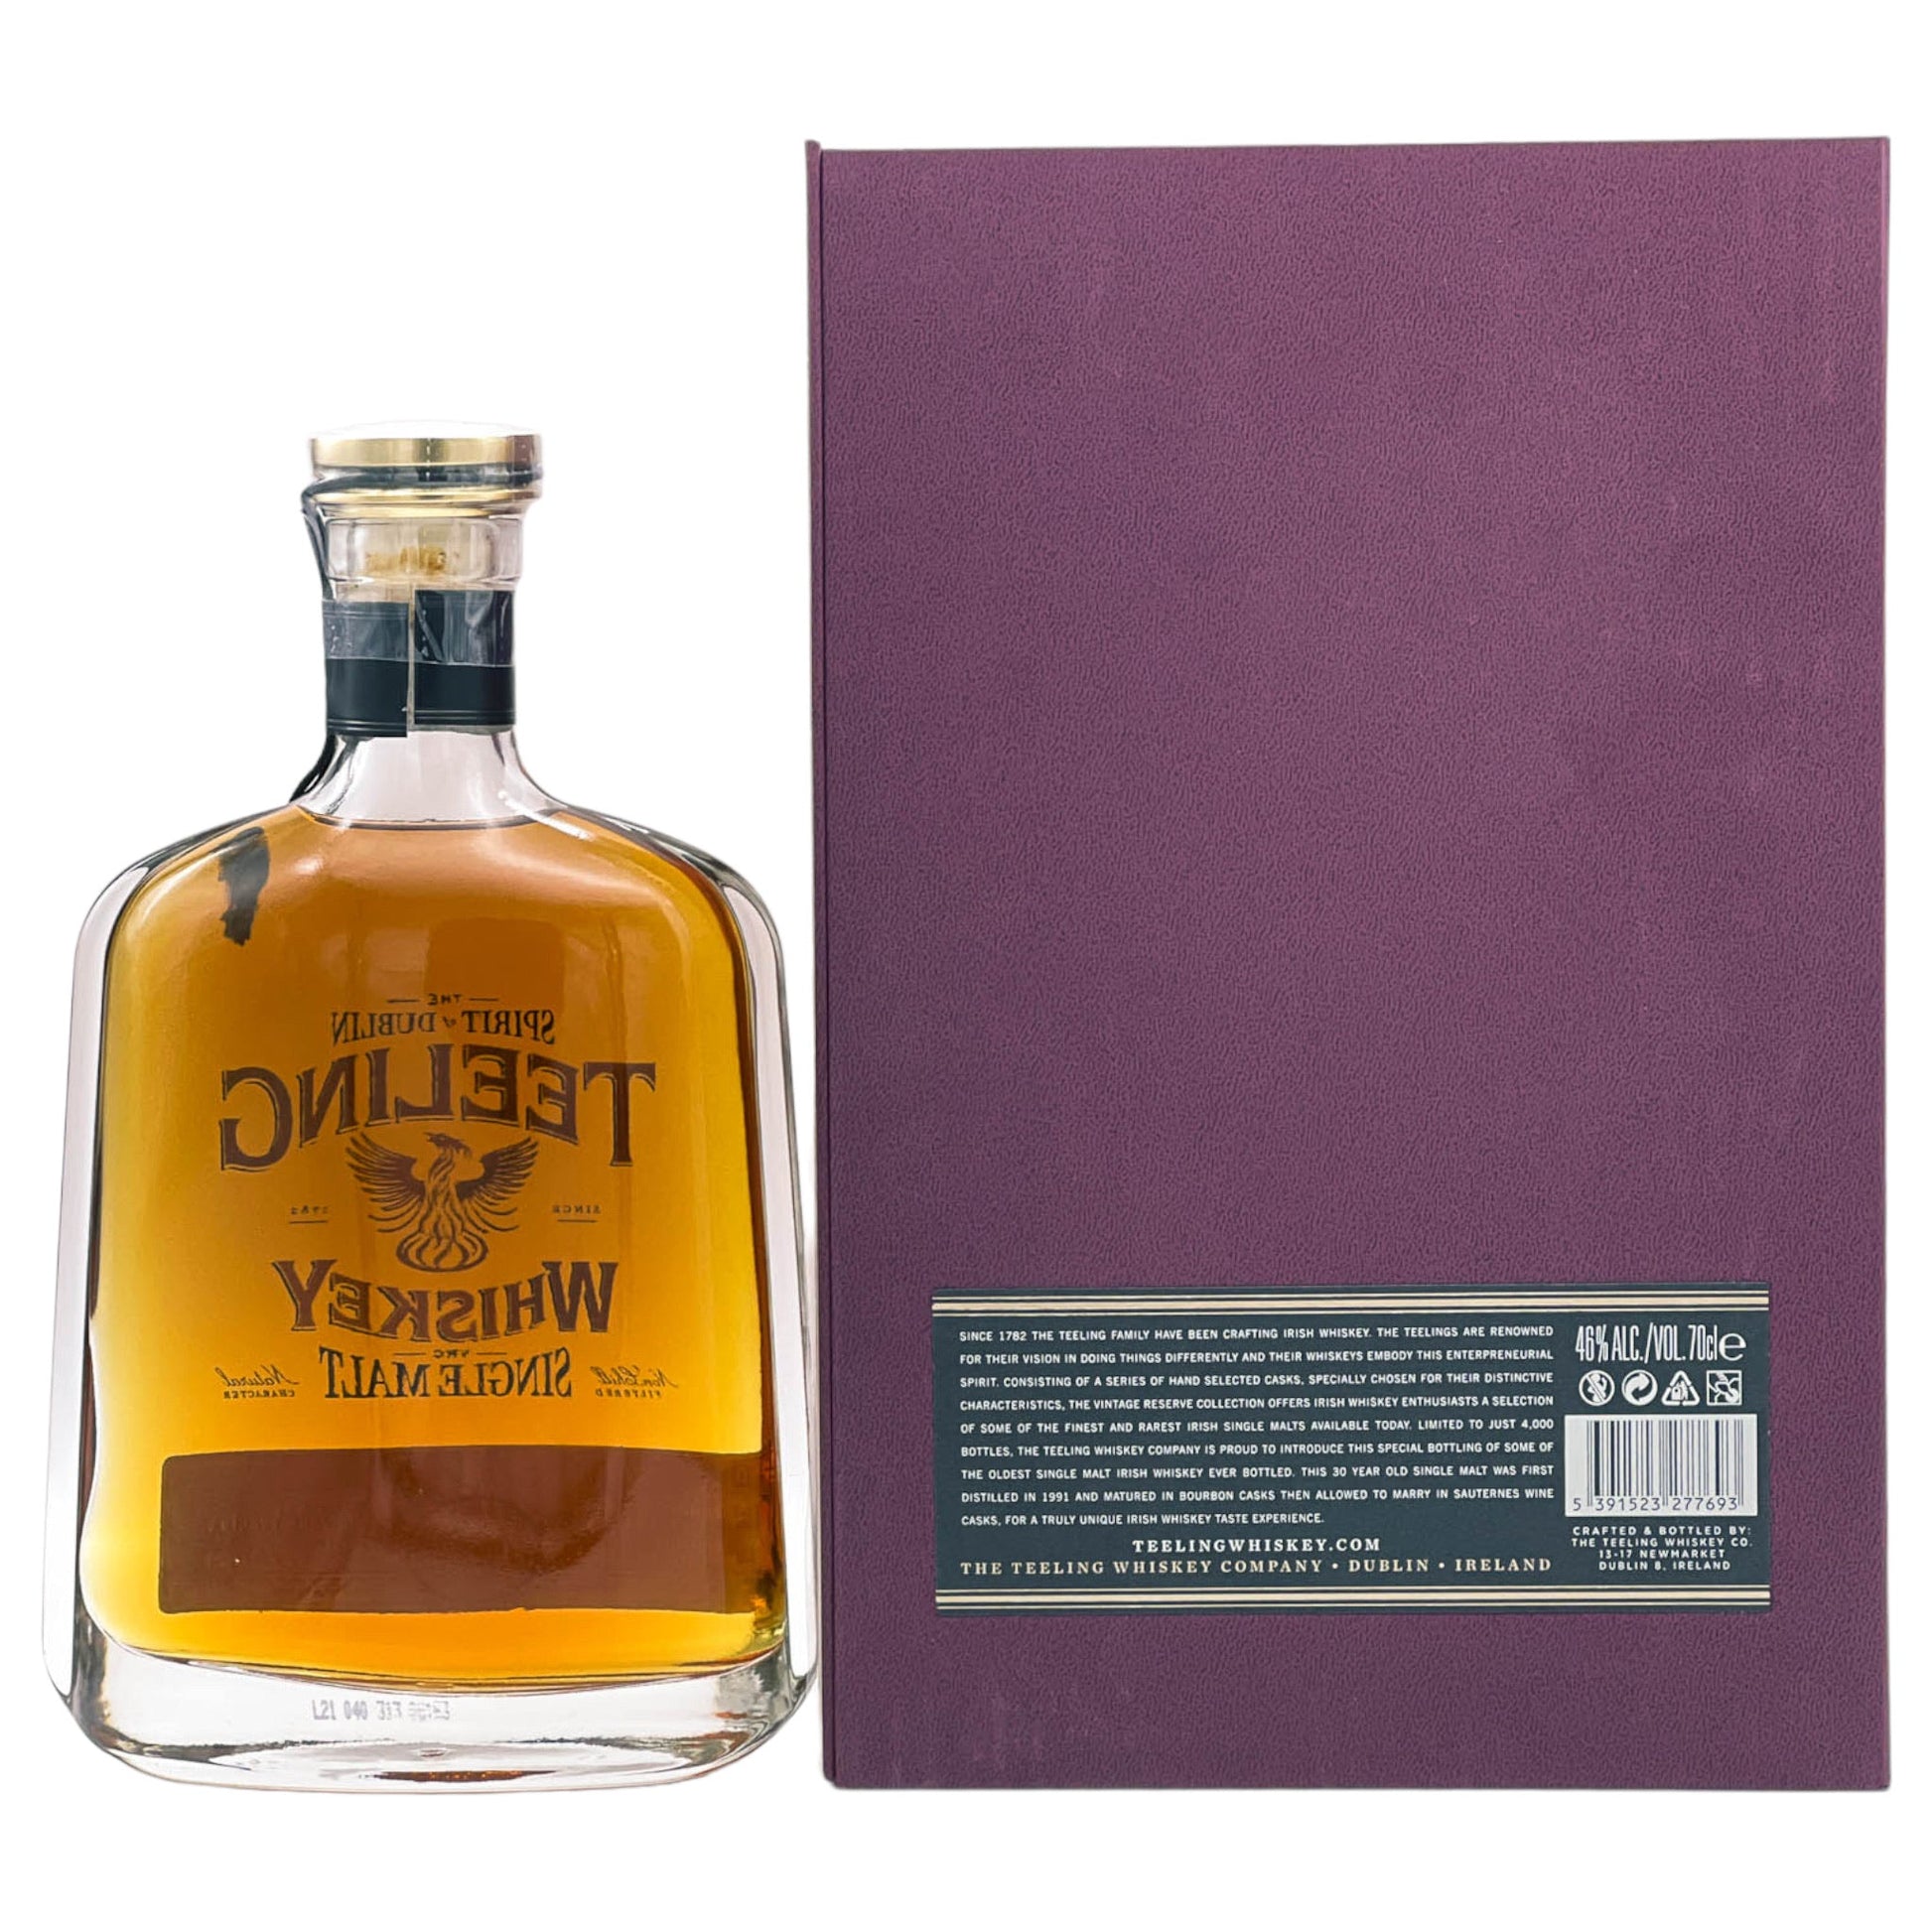 Teeling | 30 Jahre | 1991/2021 | Vintage Reserve Collection | Single Malt Irish Whiskey | 0,7l | 46%GET A BOTTLE